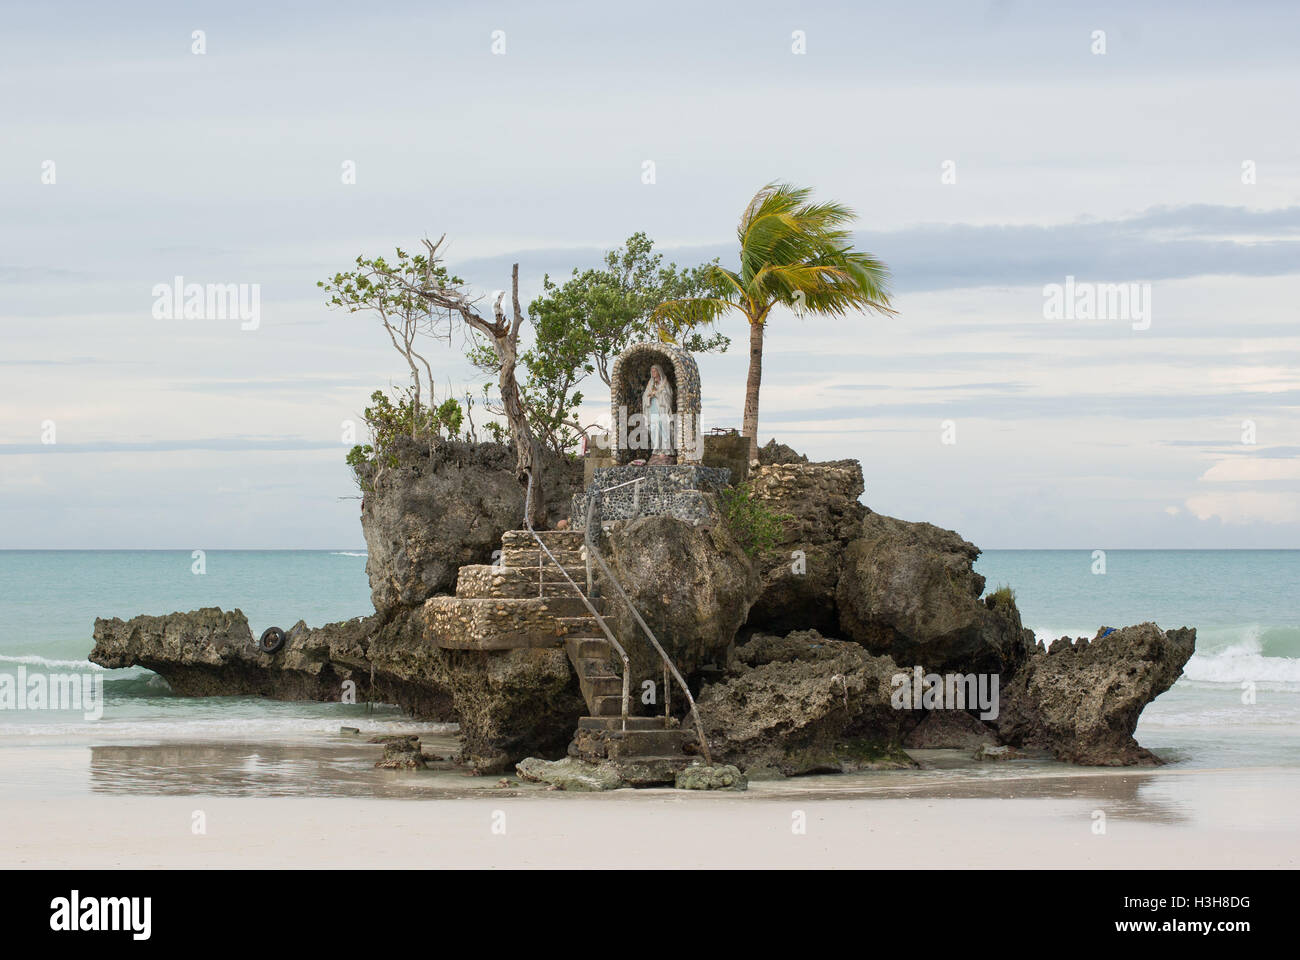 Willy's Rock in Boracay, Philippines - morning after typhoon Haiyan (Yolanda) Stock Photo